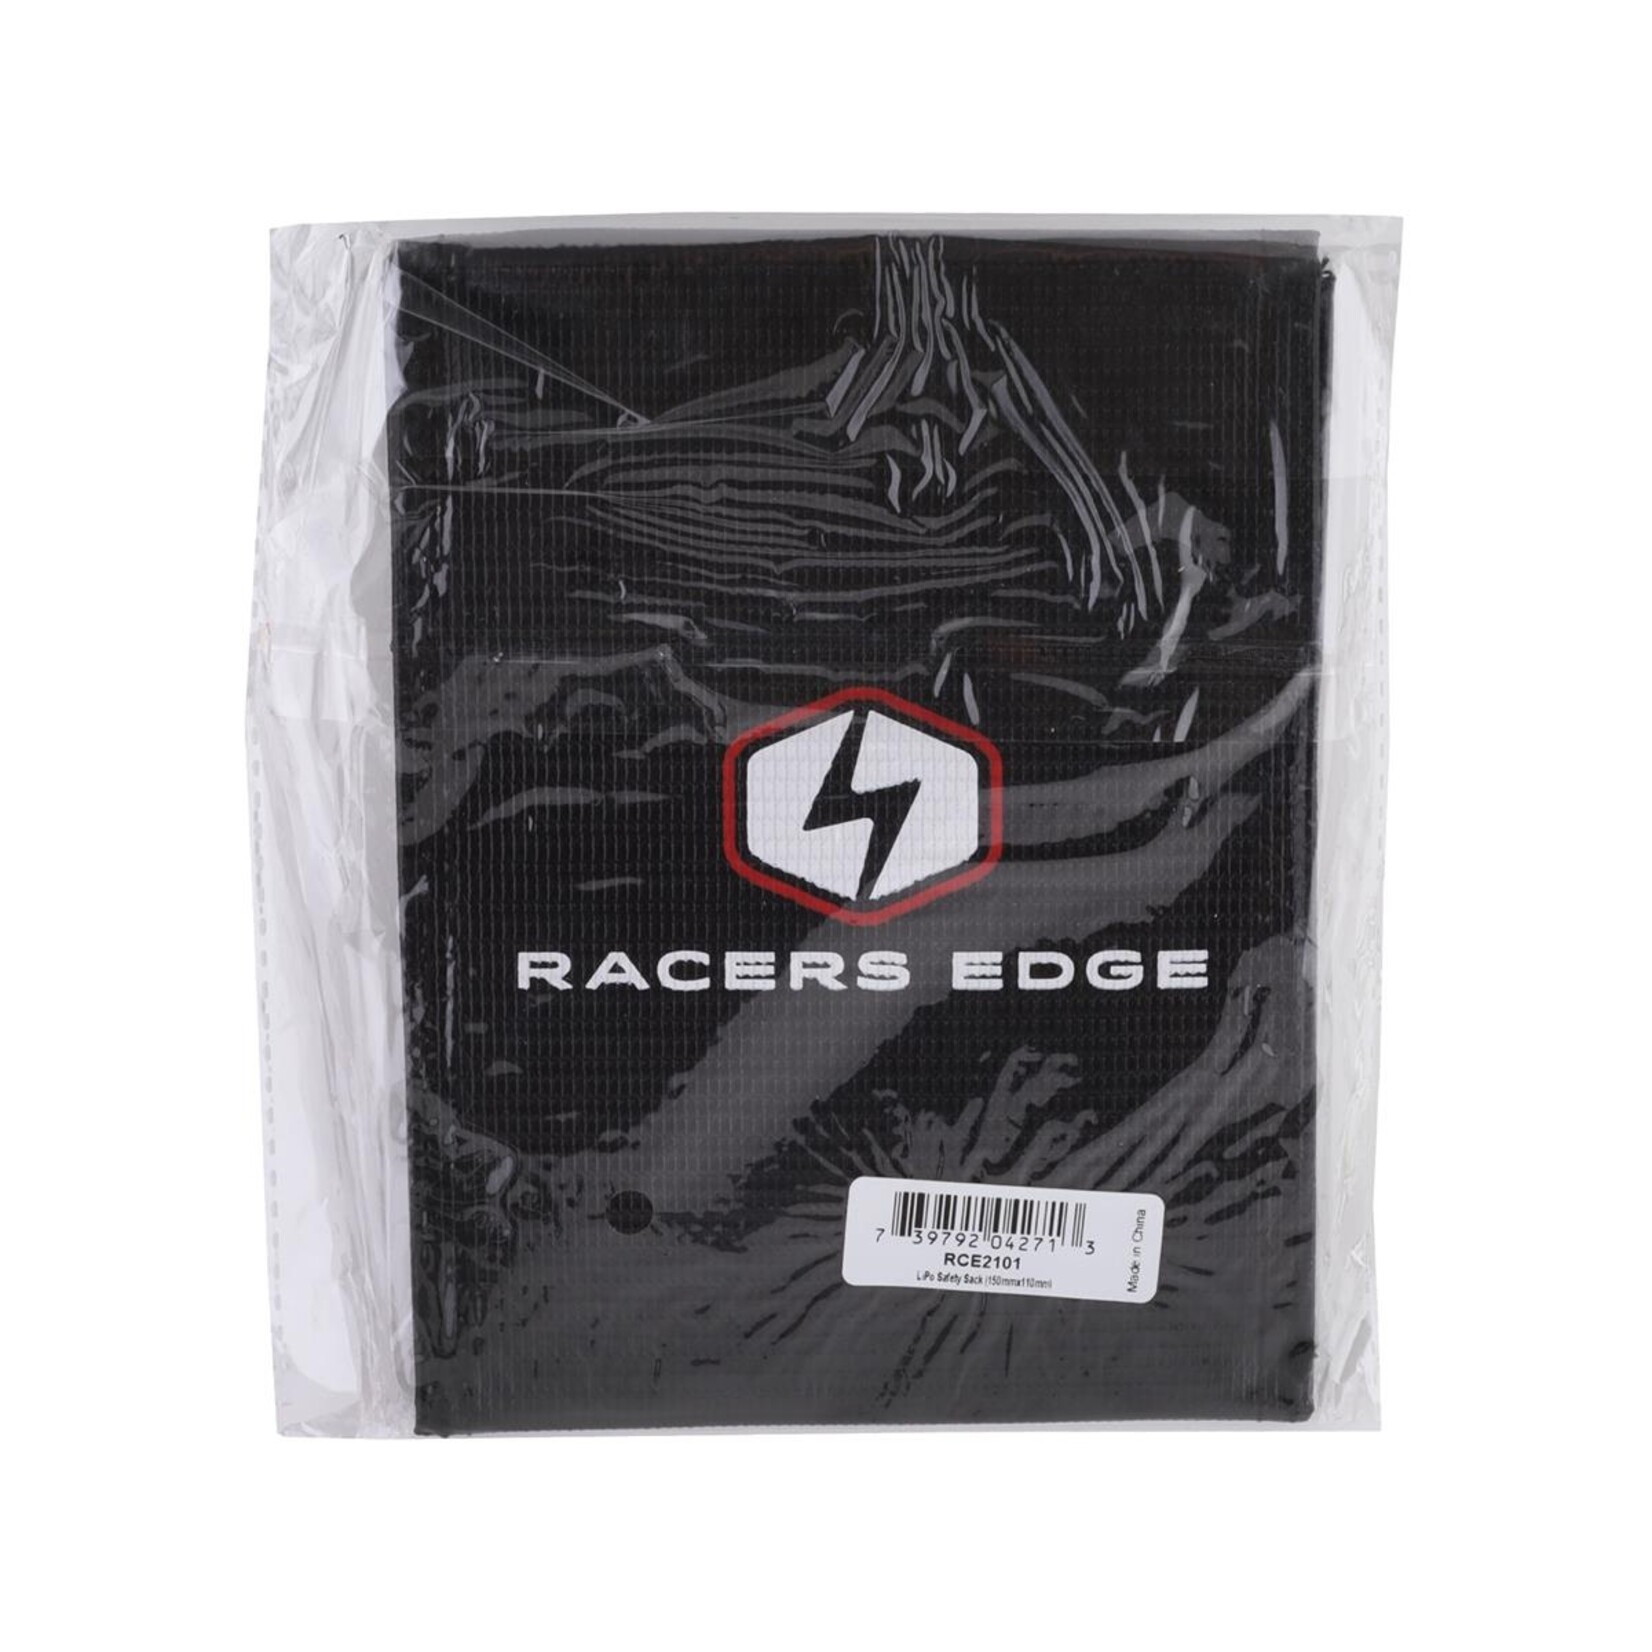 Racers Edge Racers Edge LiPo Safety Sack (150x110mm) #RCE2101